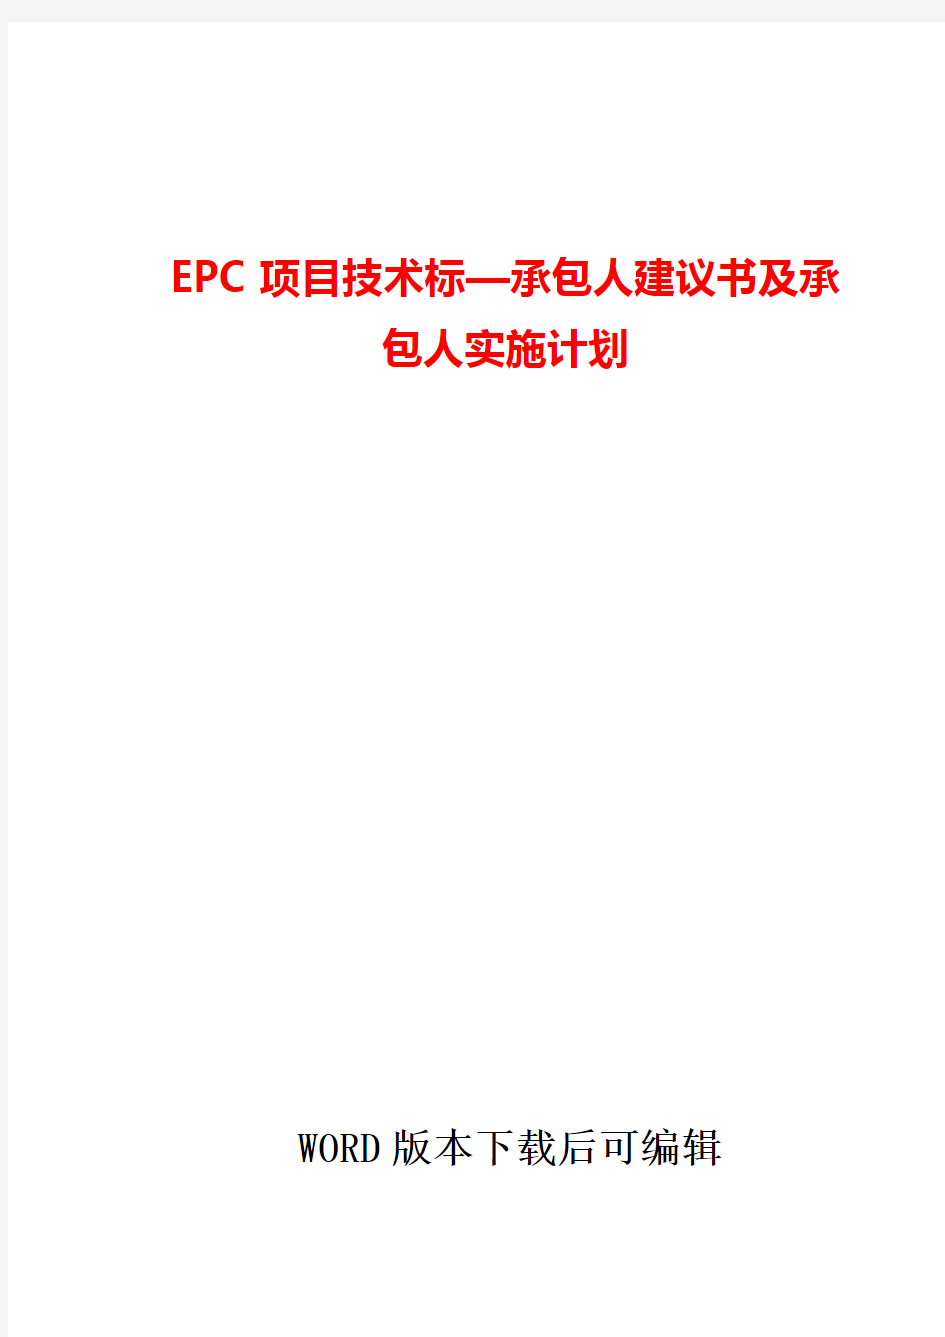 EPC项目技术标承包人建议书及承包人实施计划word